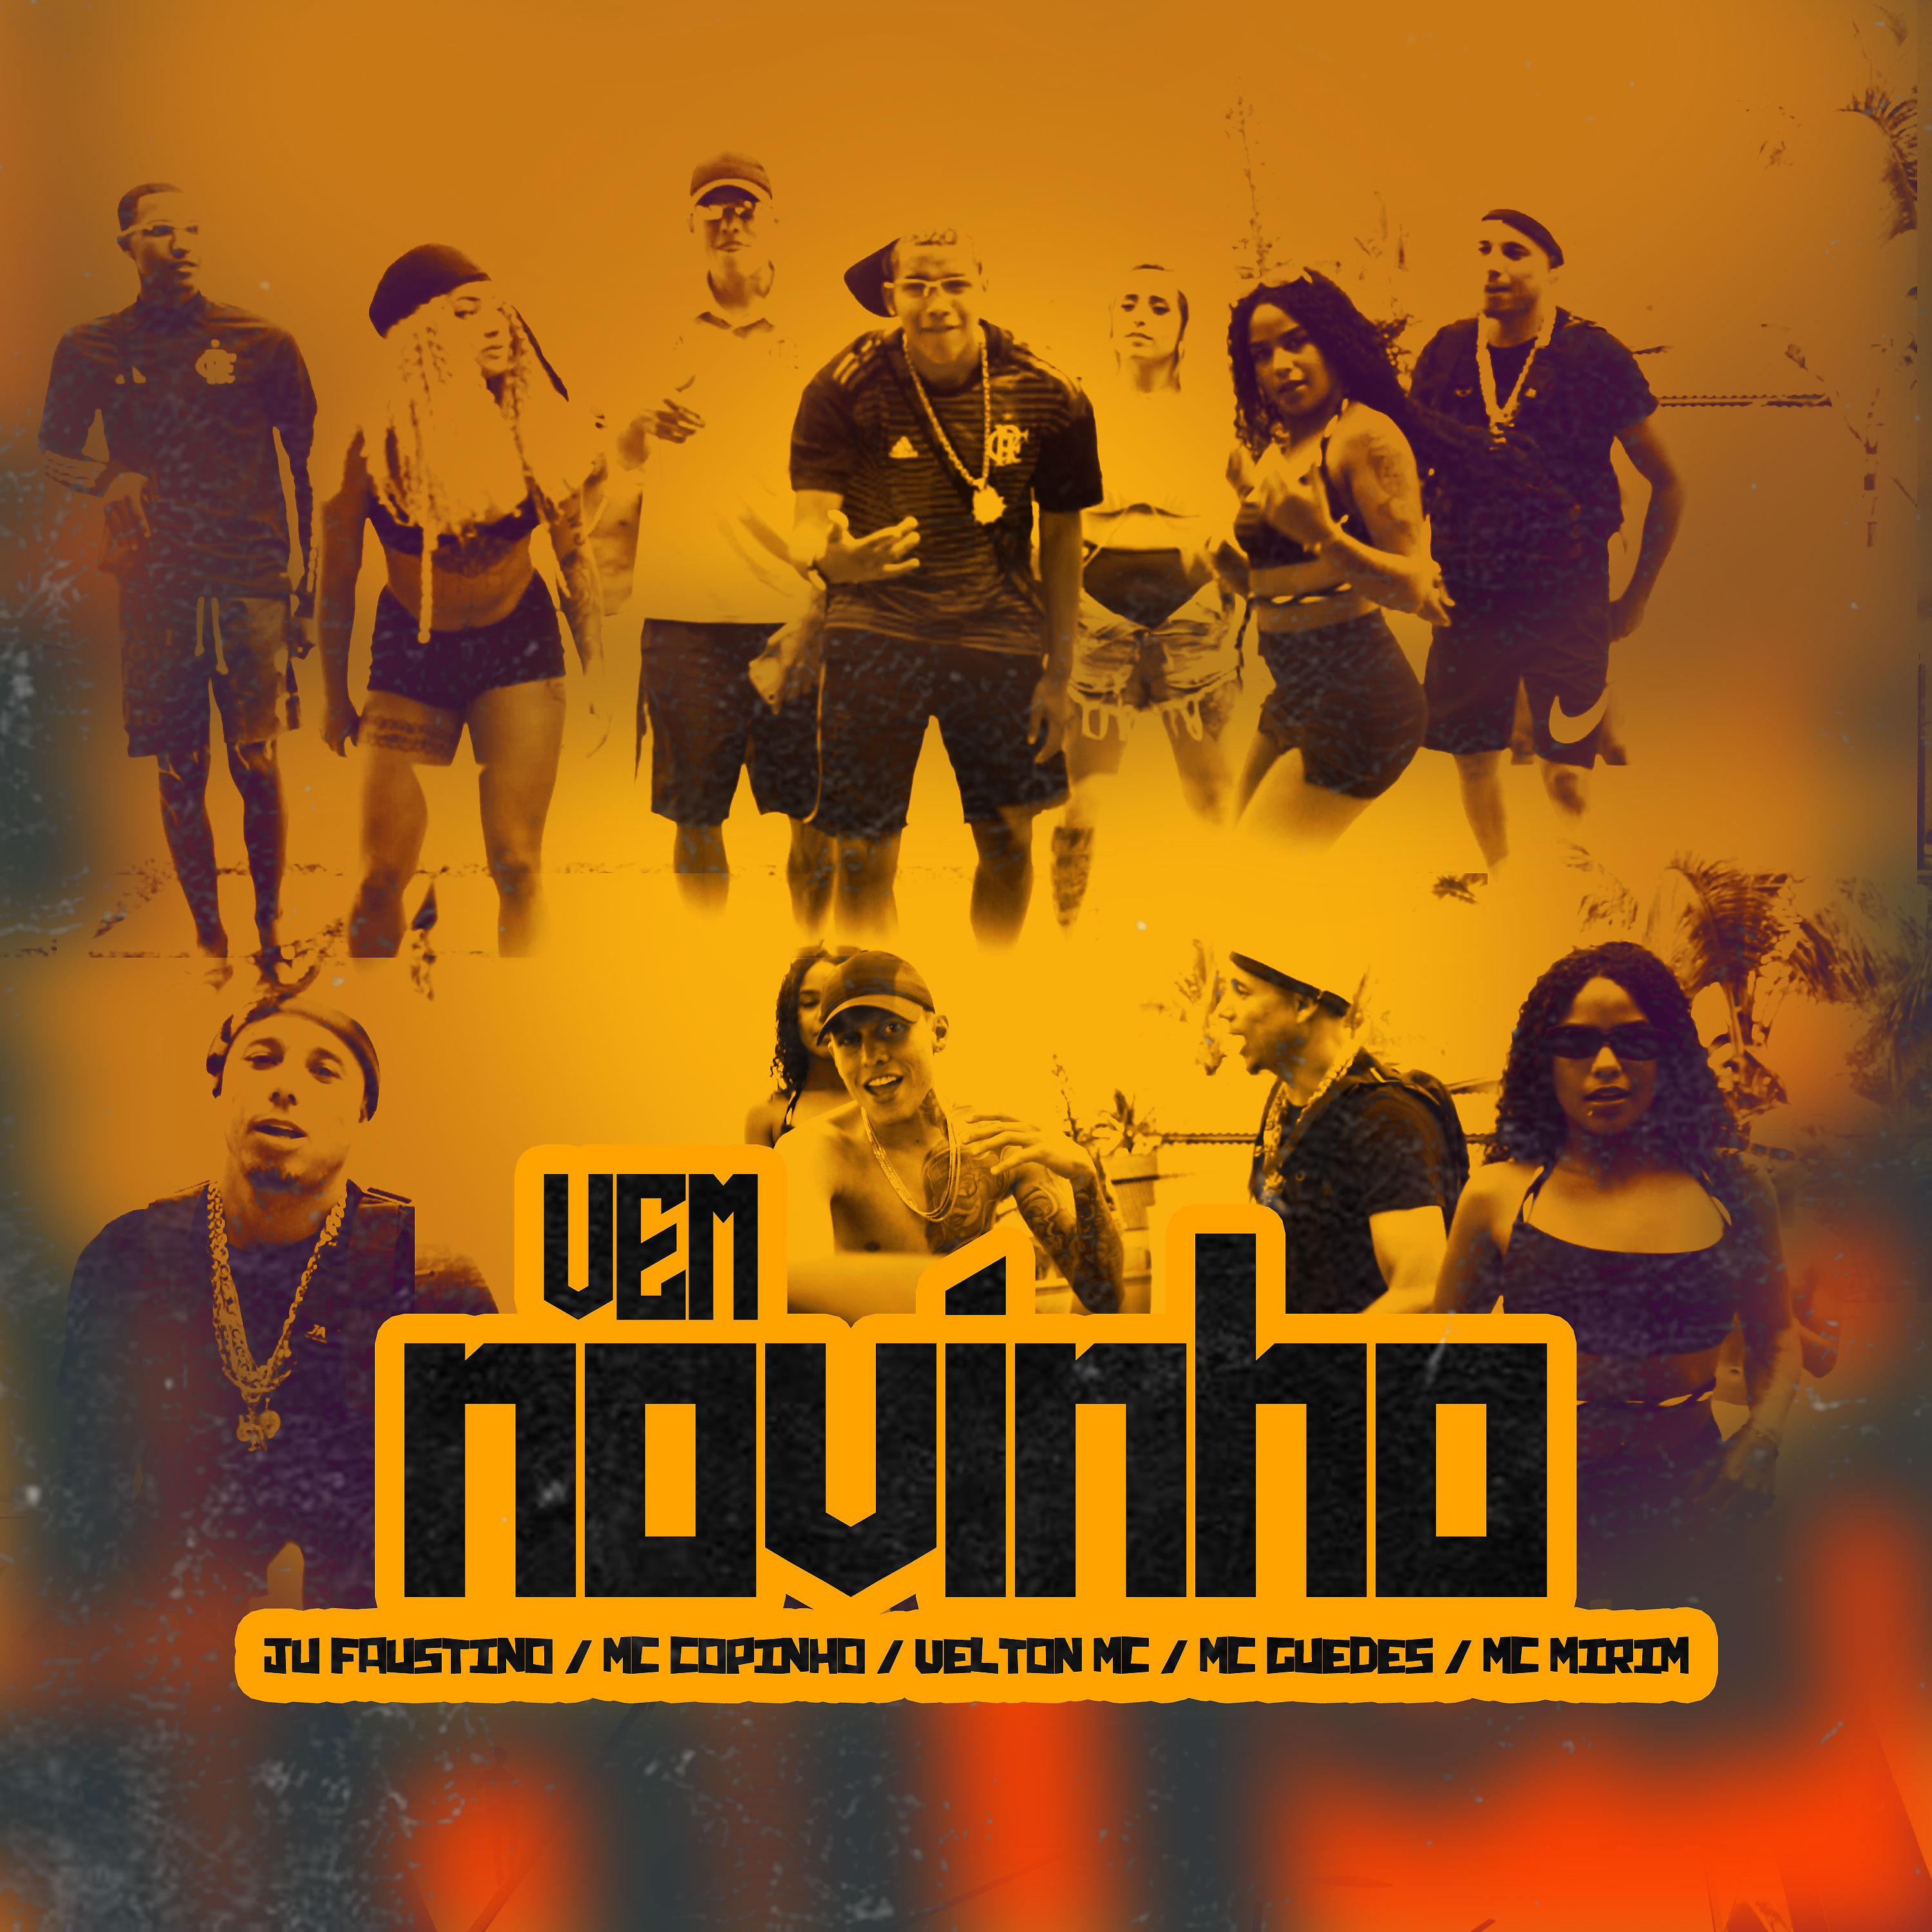 Постер альбома Vem Novinho